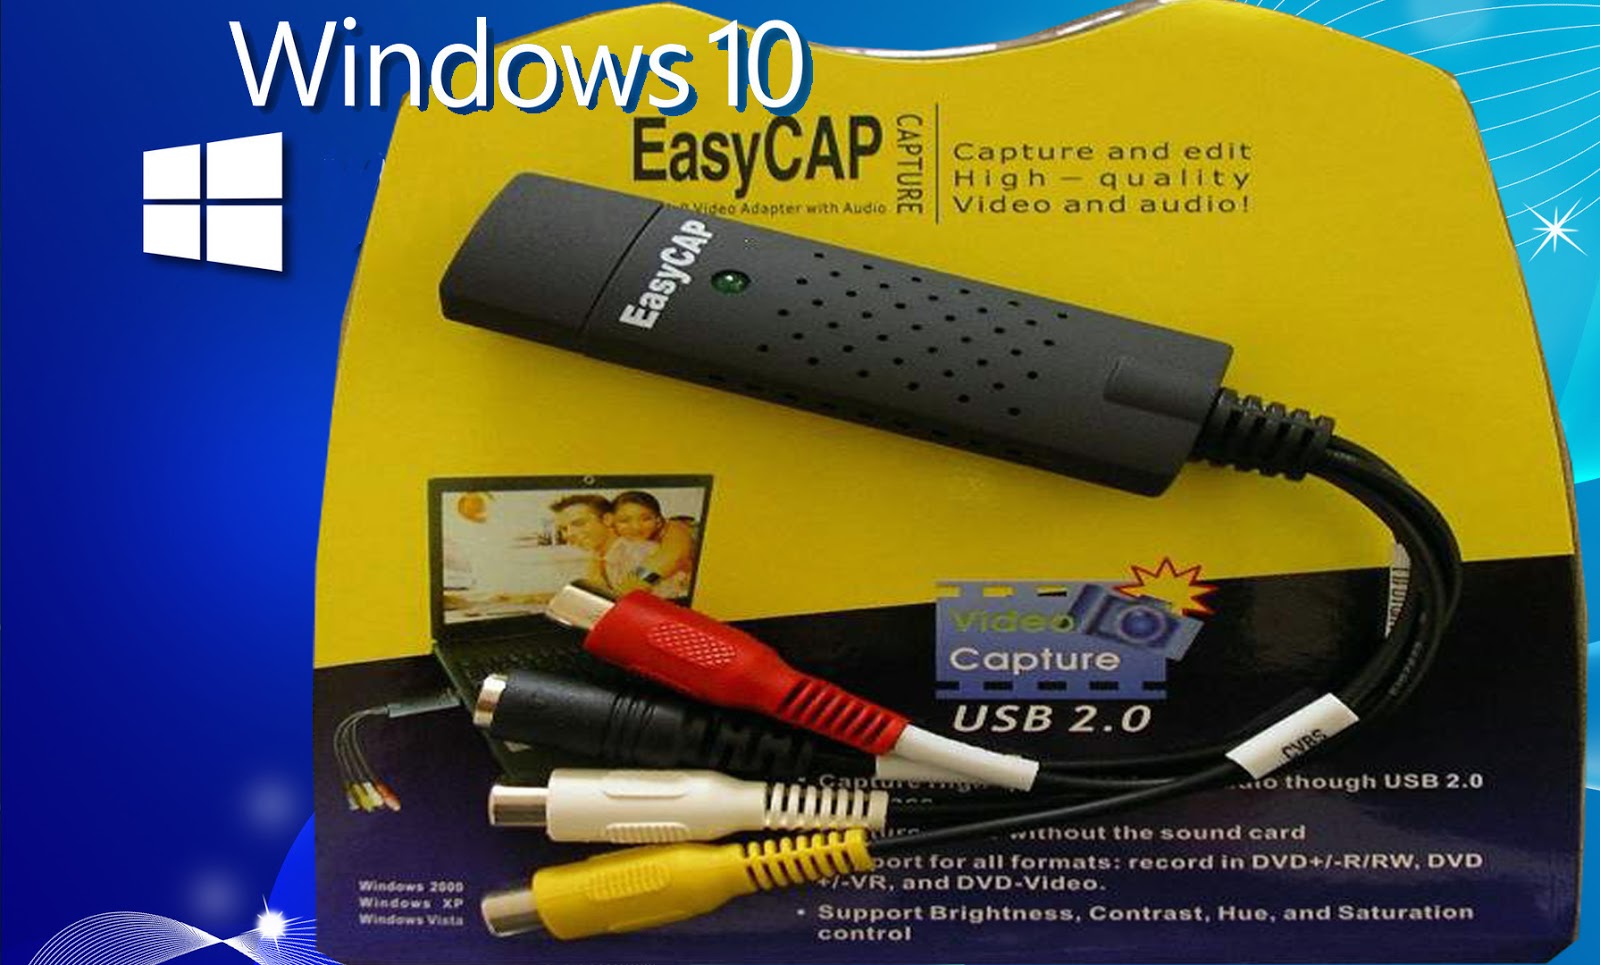 Easycap usb 2.0 видео. EASYCAP capture. EASYCAP Driver Windows 10. EASYCAP USB 2.0 драйвер. EASYCAP 4 программа.